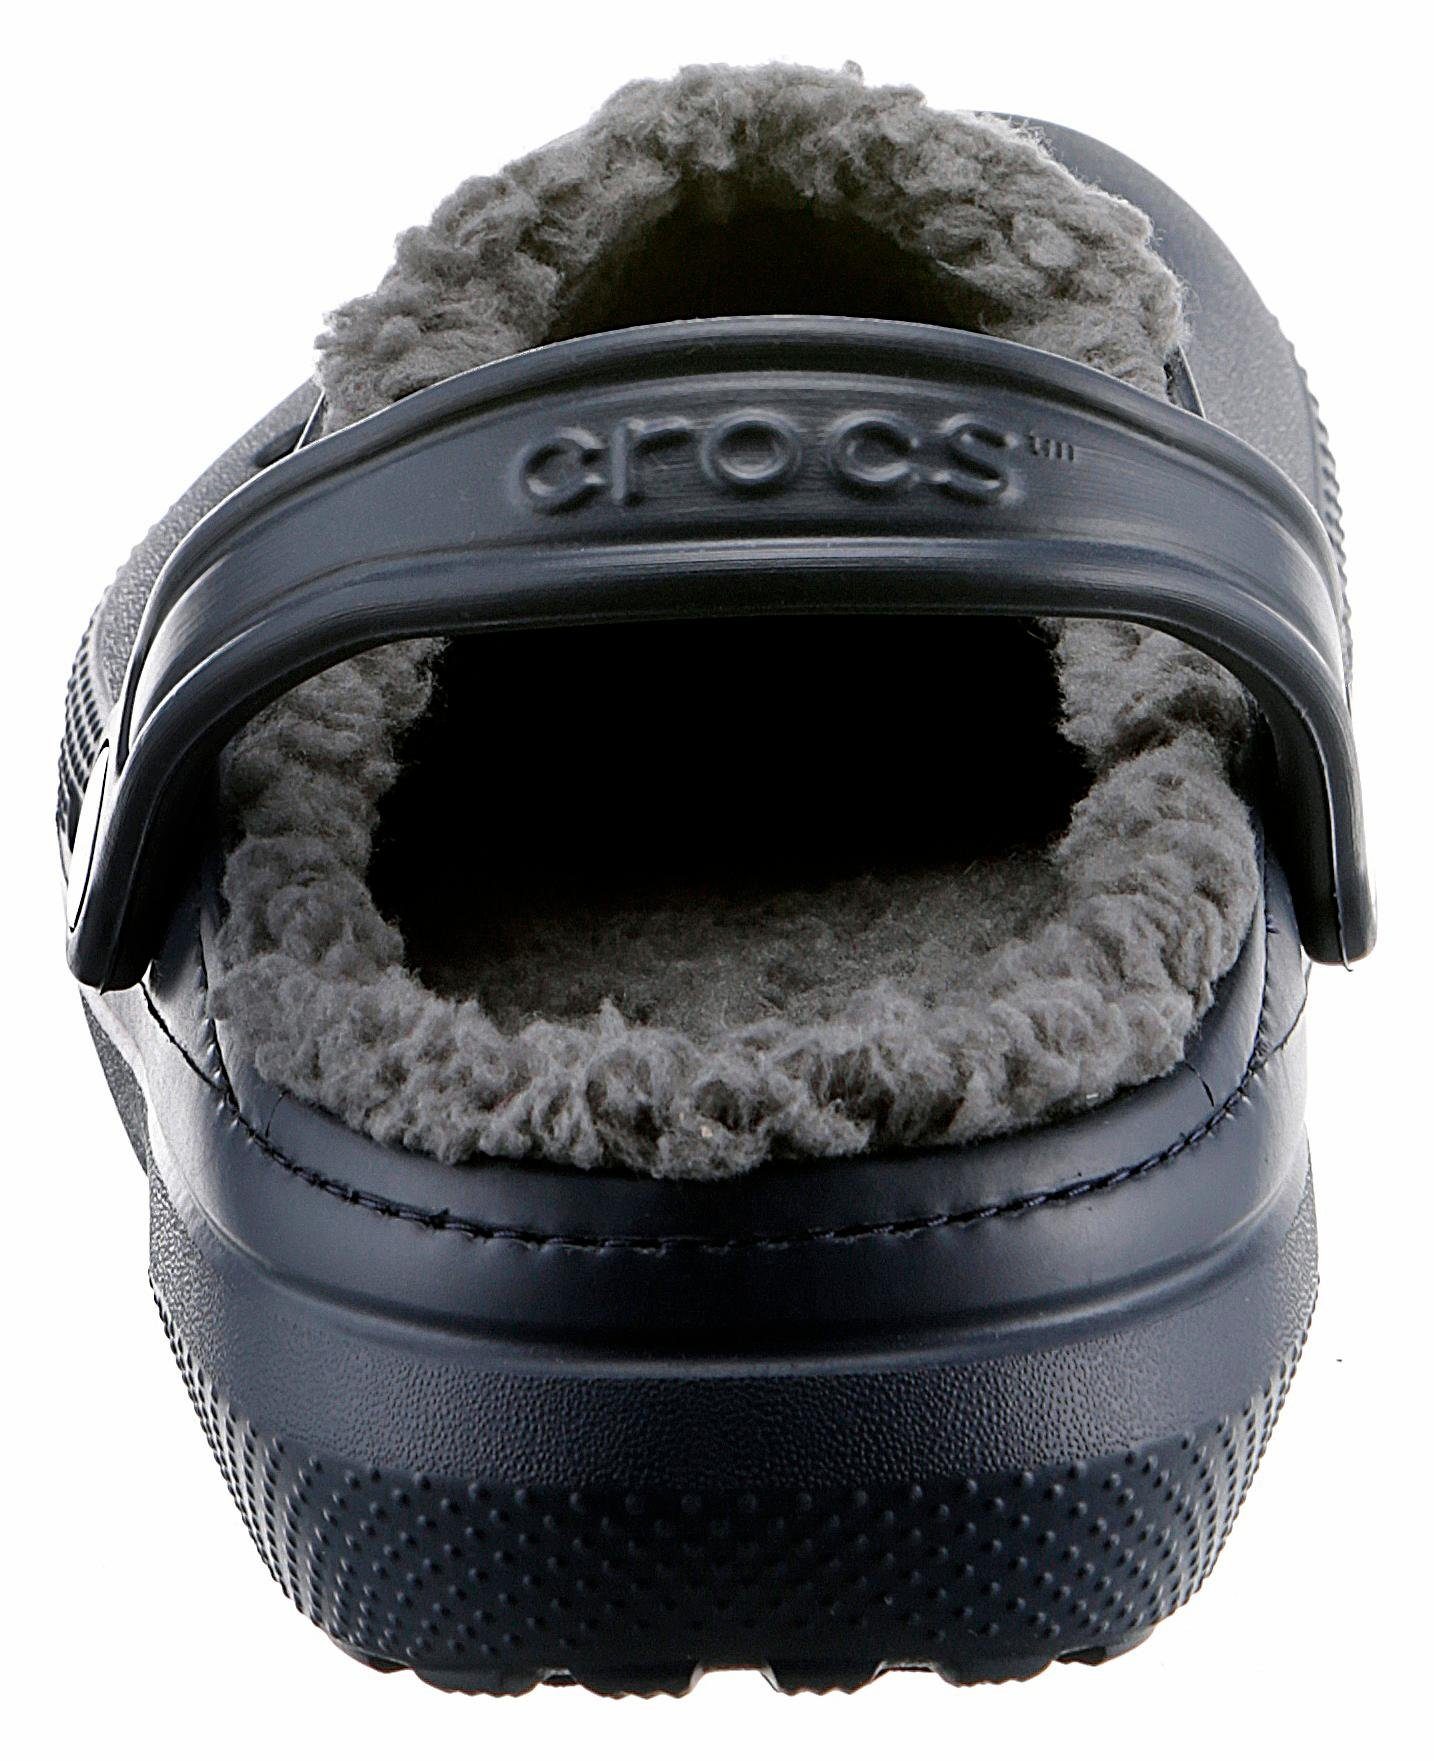 Crocs Classic Lined Clog mit navy-grau Hausschuh kuscheligem Fellimitat